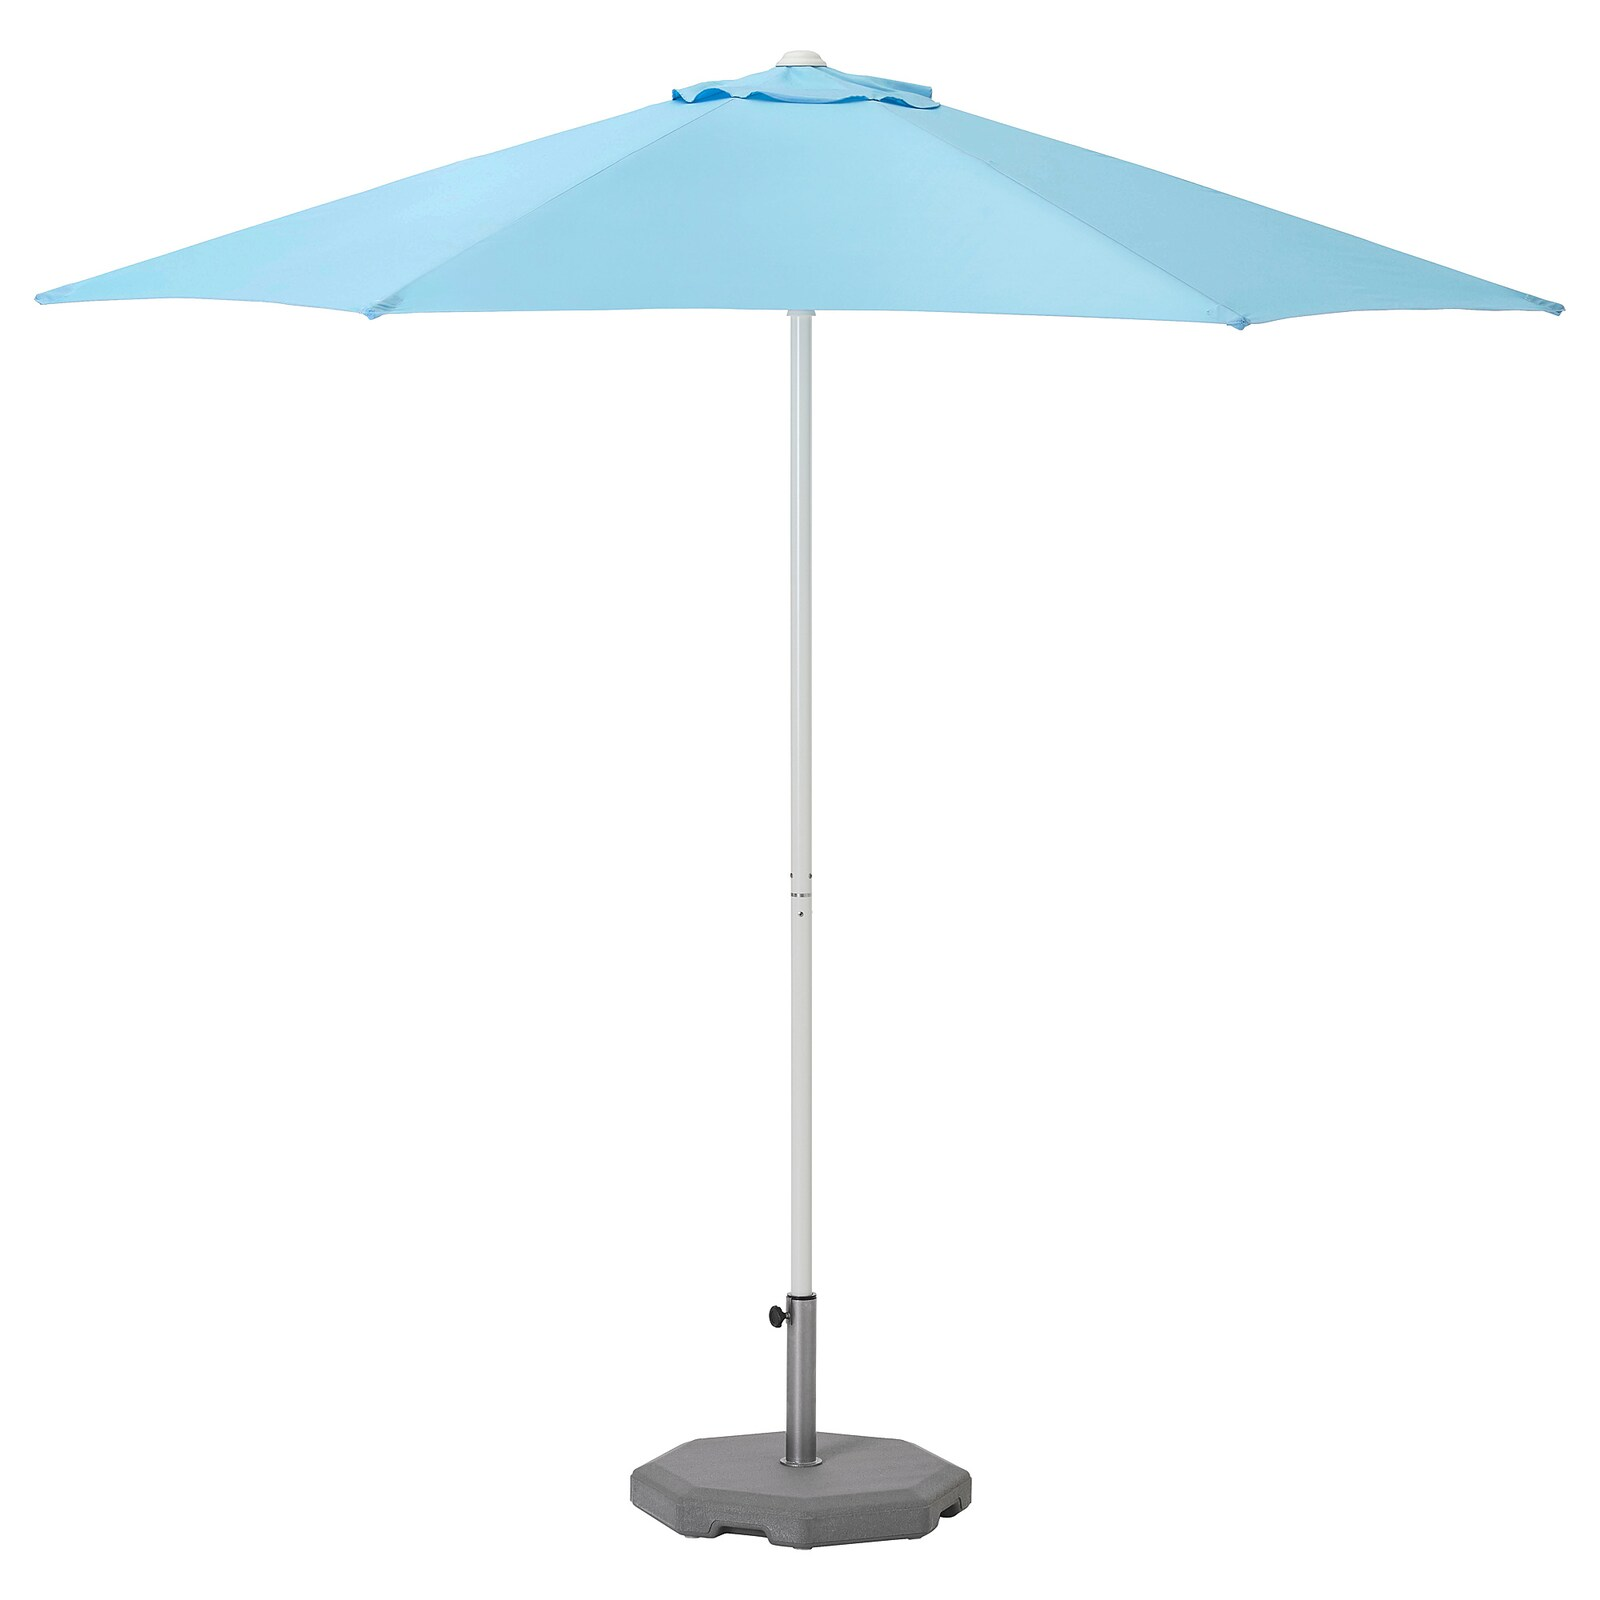 Зонтик рост. Зонт икеа хёгён. Зонт садовый икеа. Зонт икеа уличный. Зонт икеа хёгён купол 270 см.